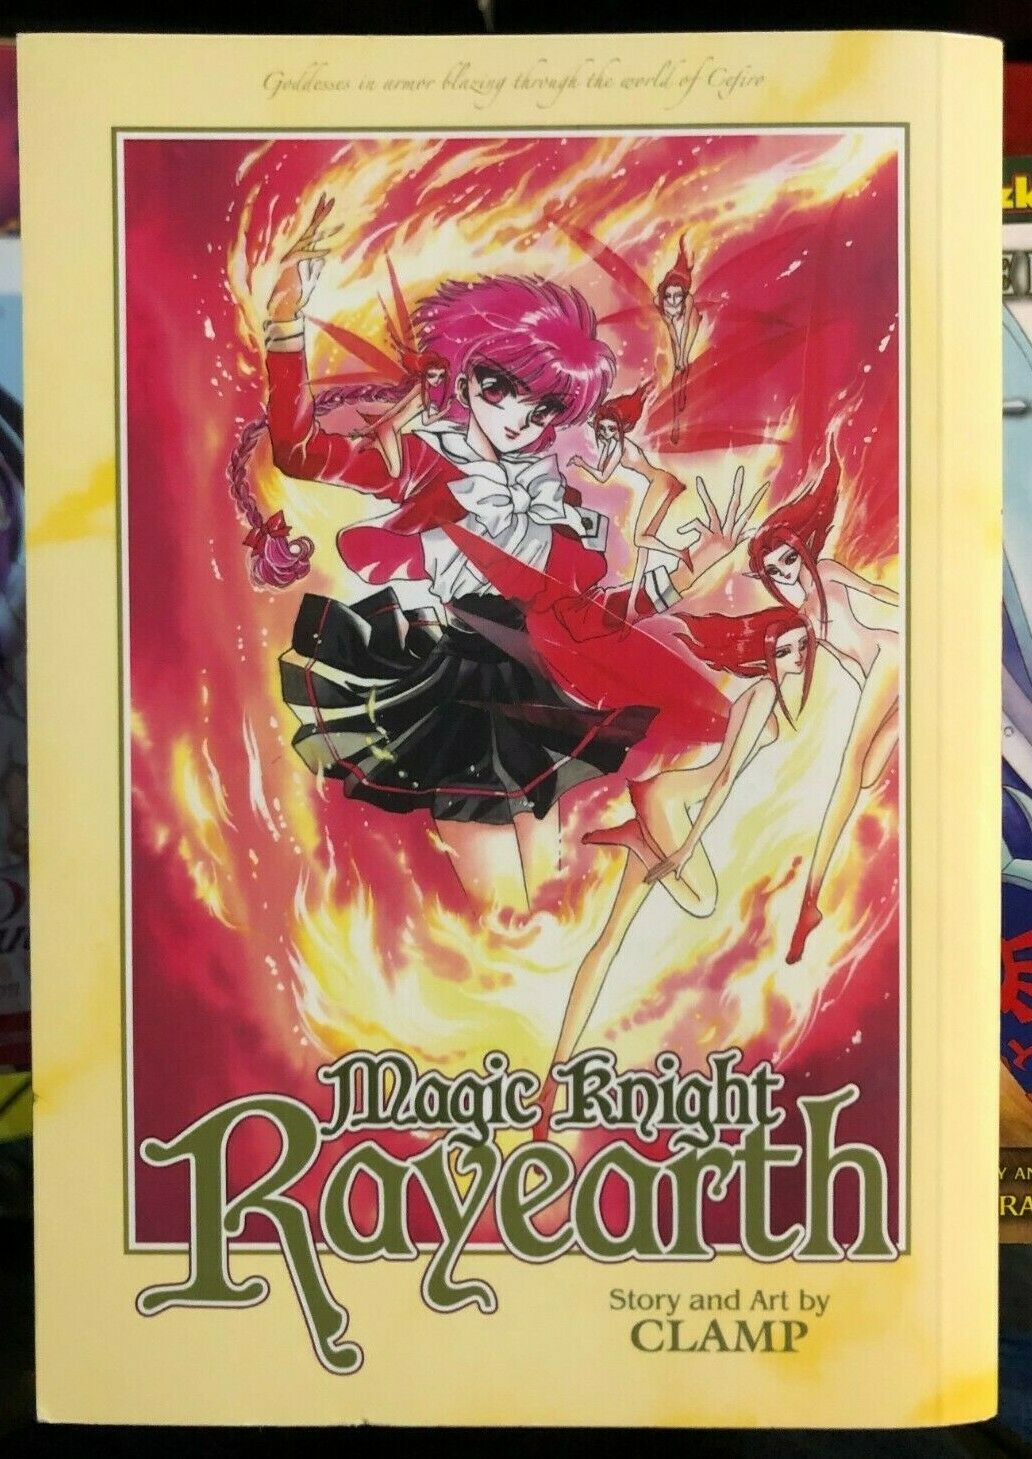 magic knight rayearth manga cover art